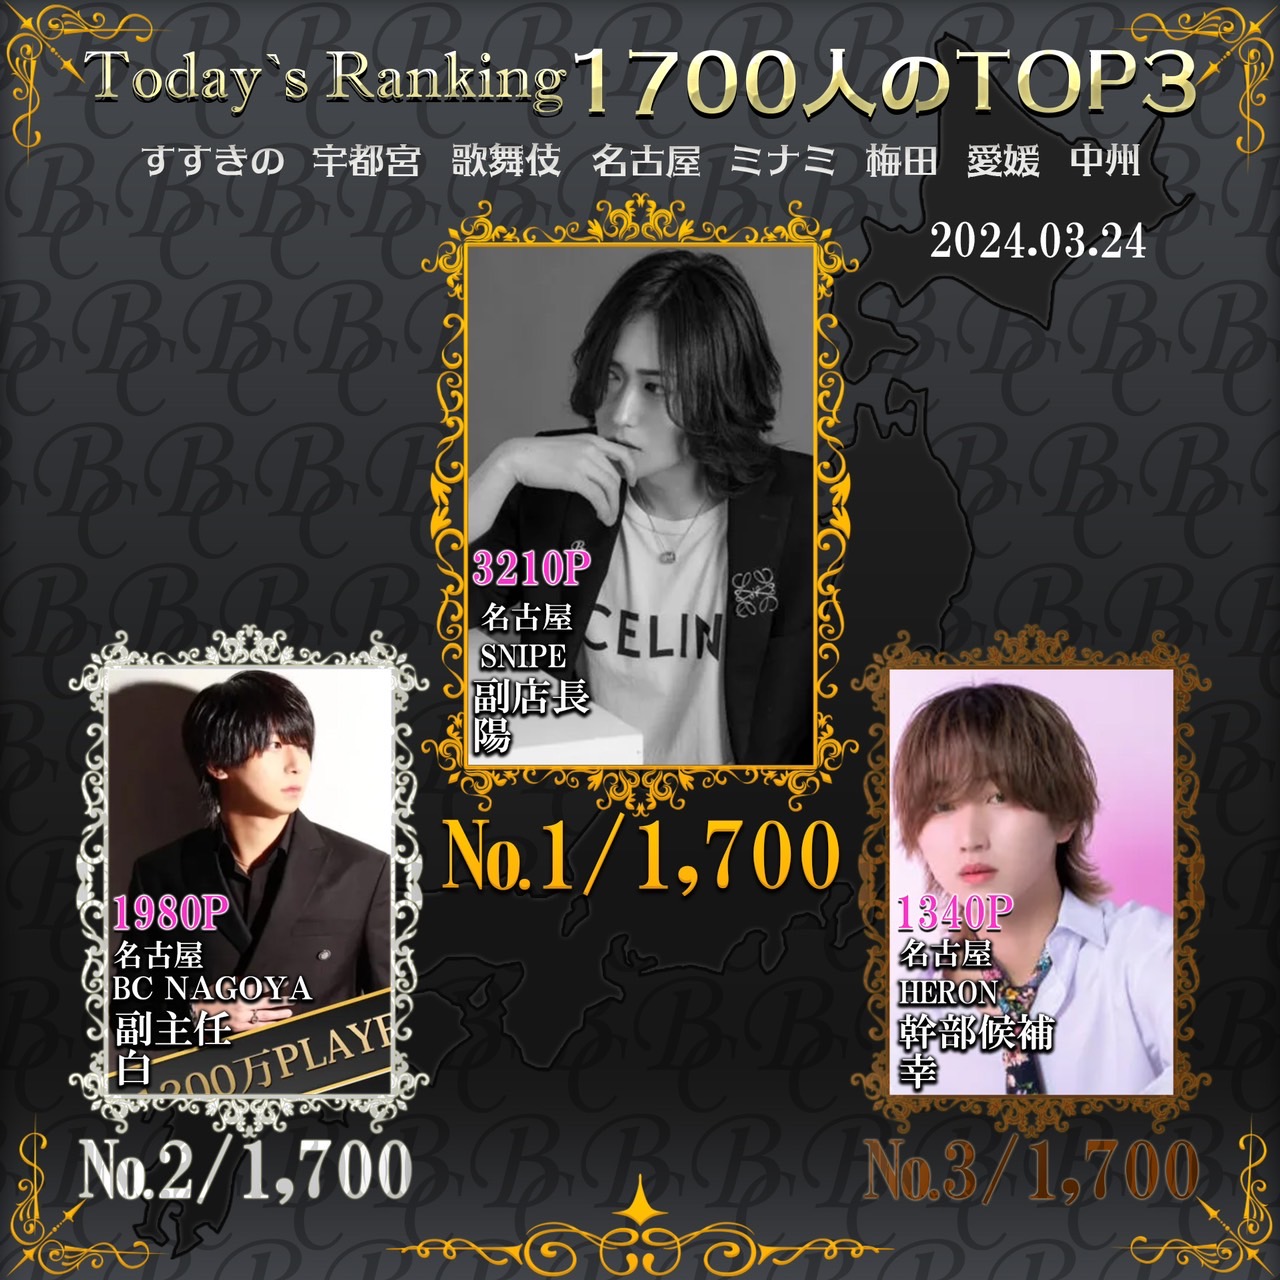 3/24 Today’s Ranking